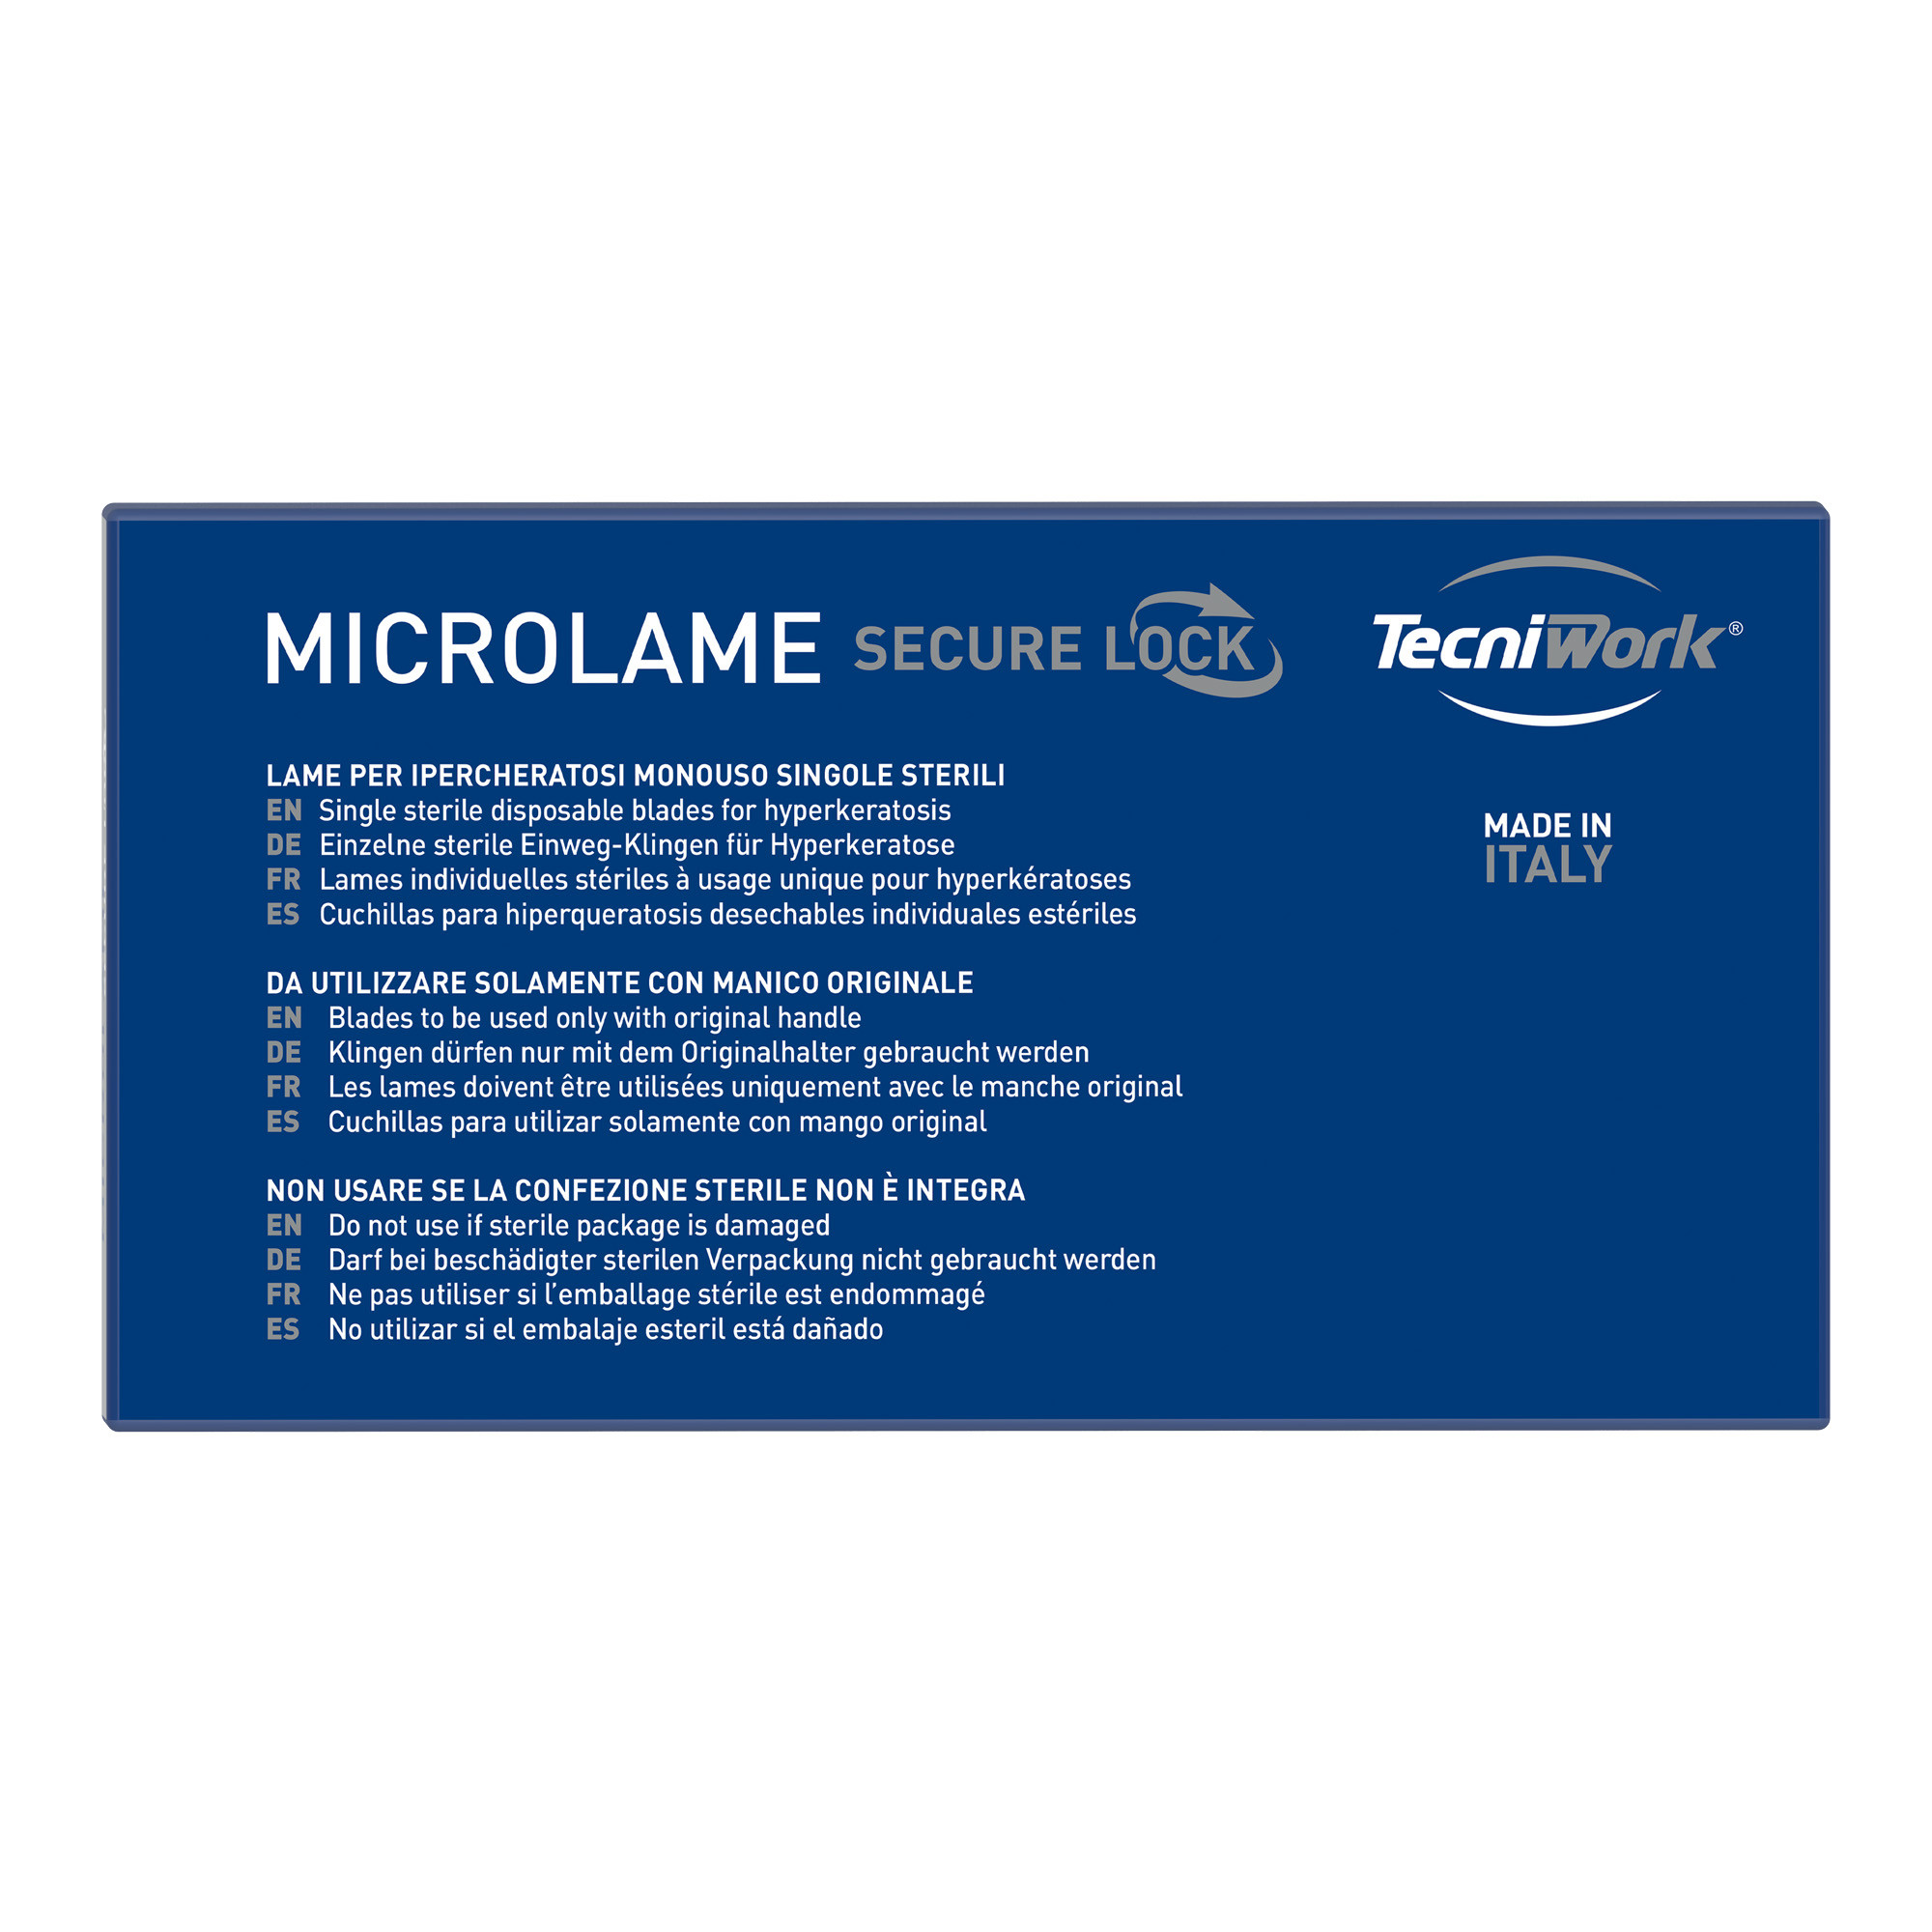 Microlame professionali singole sterili e monouso Secure Lock misura 1 50 pz